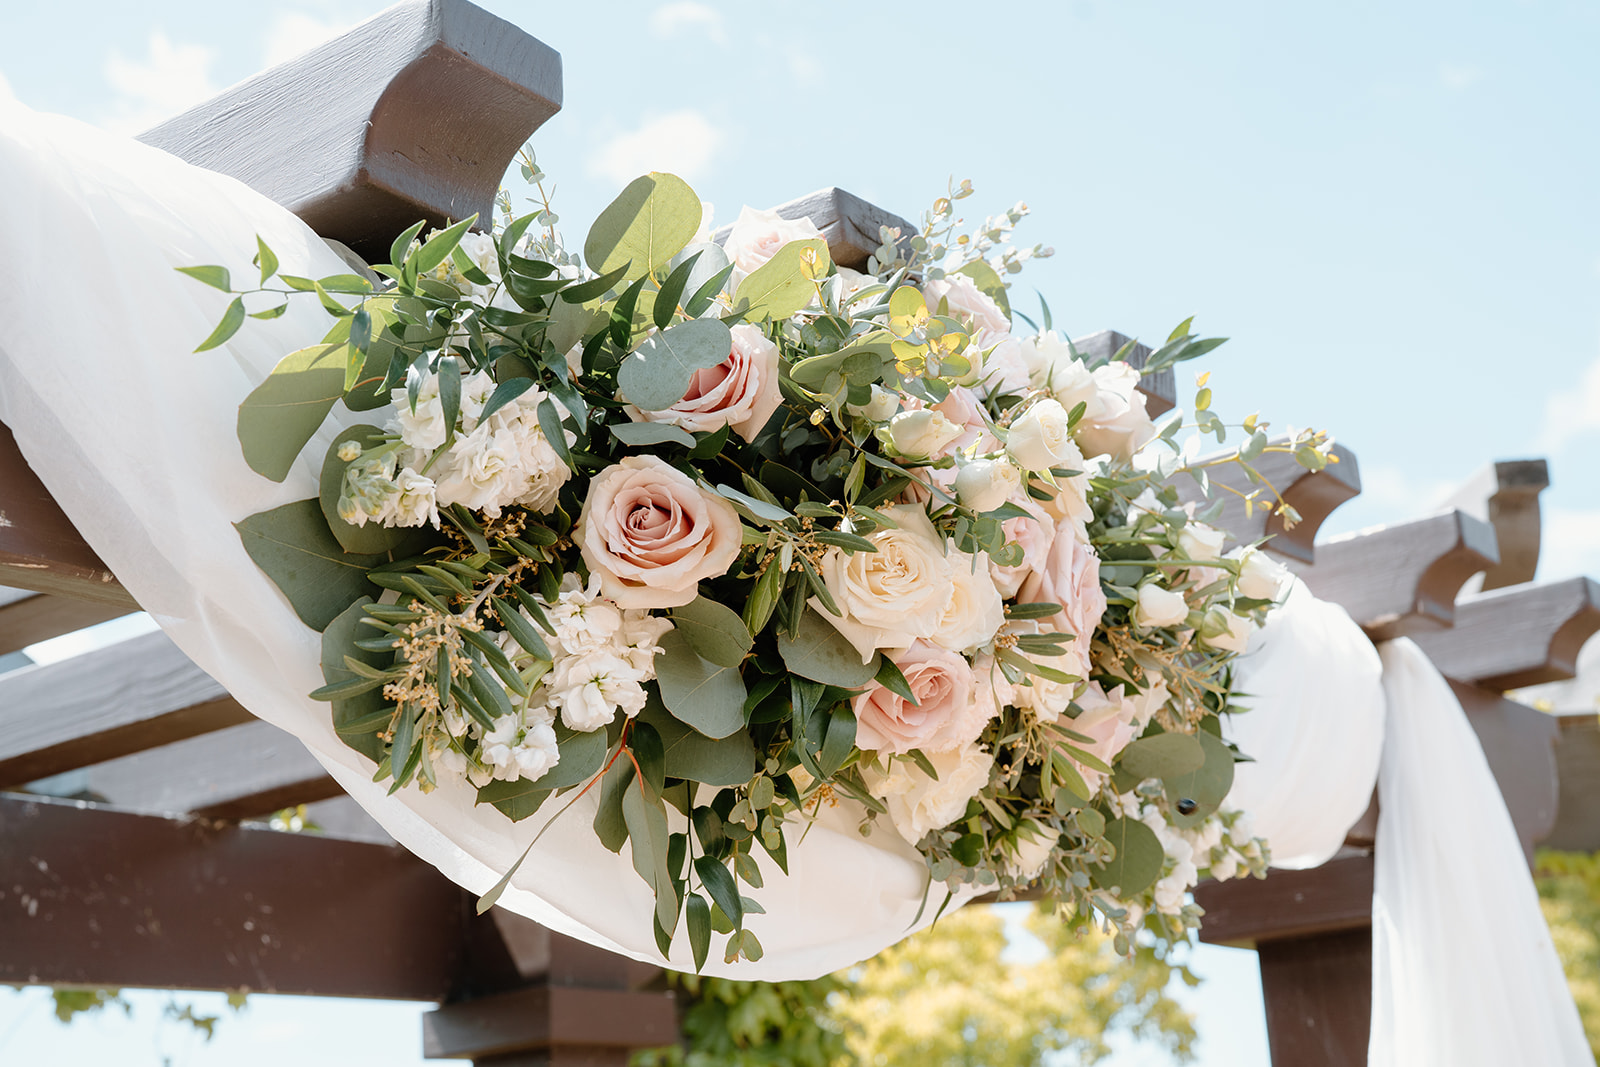 Sydney Jai Photography - Northern California wedding photographer, spring wedding flowers